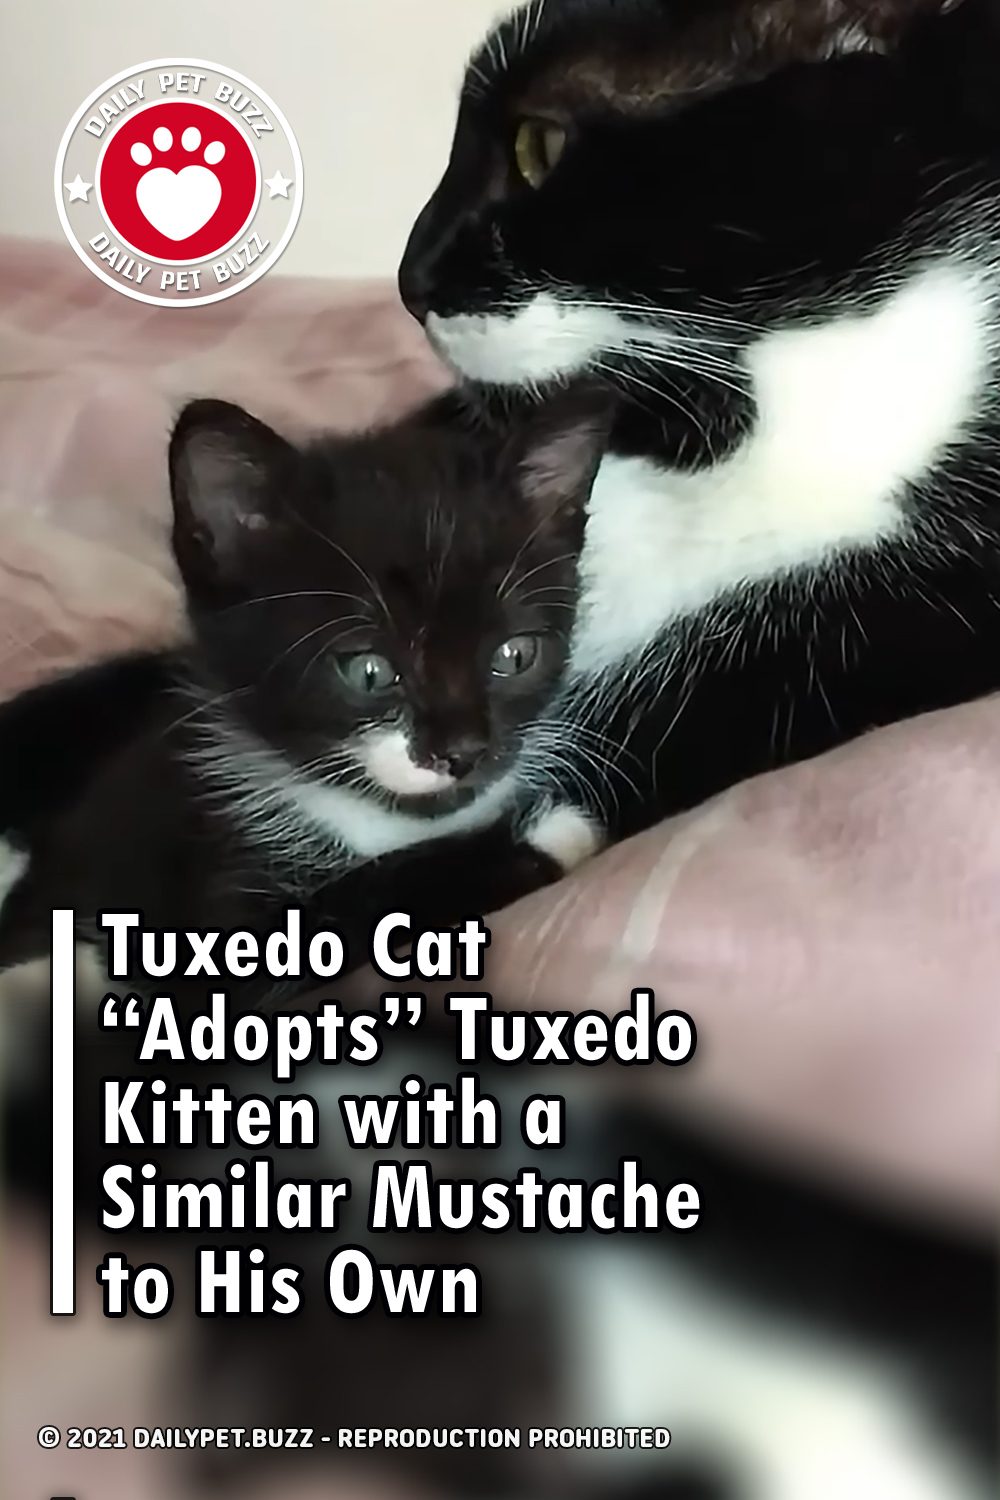 Tuxedo Cat “Adopts” Tuxedo Kitten with a Similar Mustache to His Own